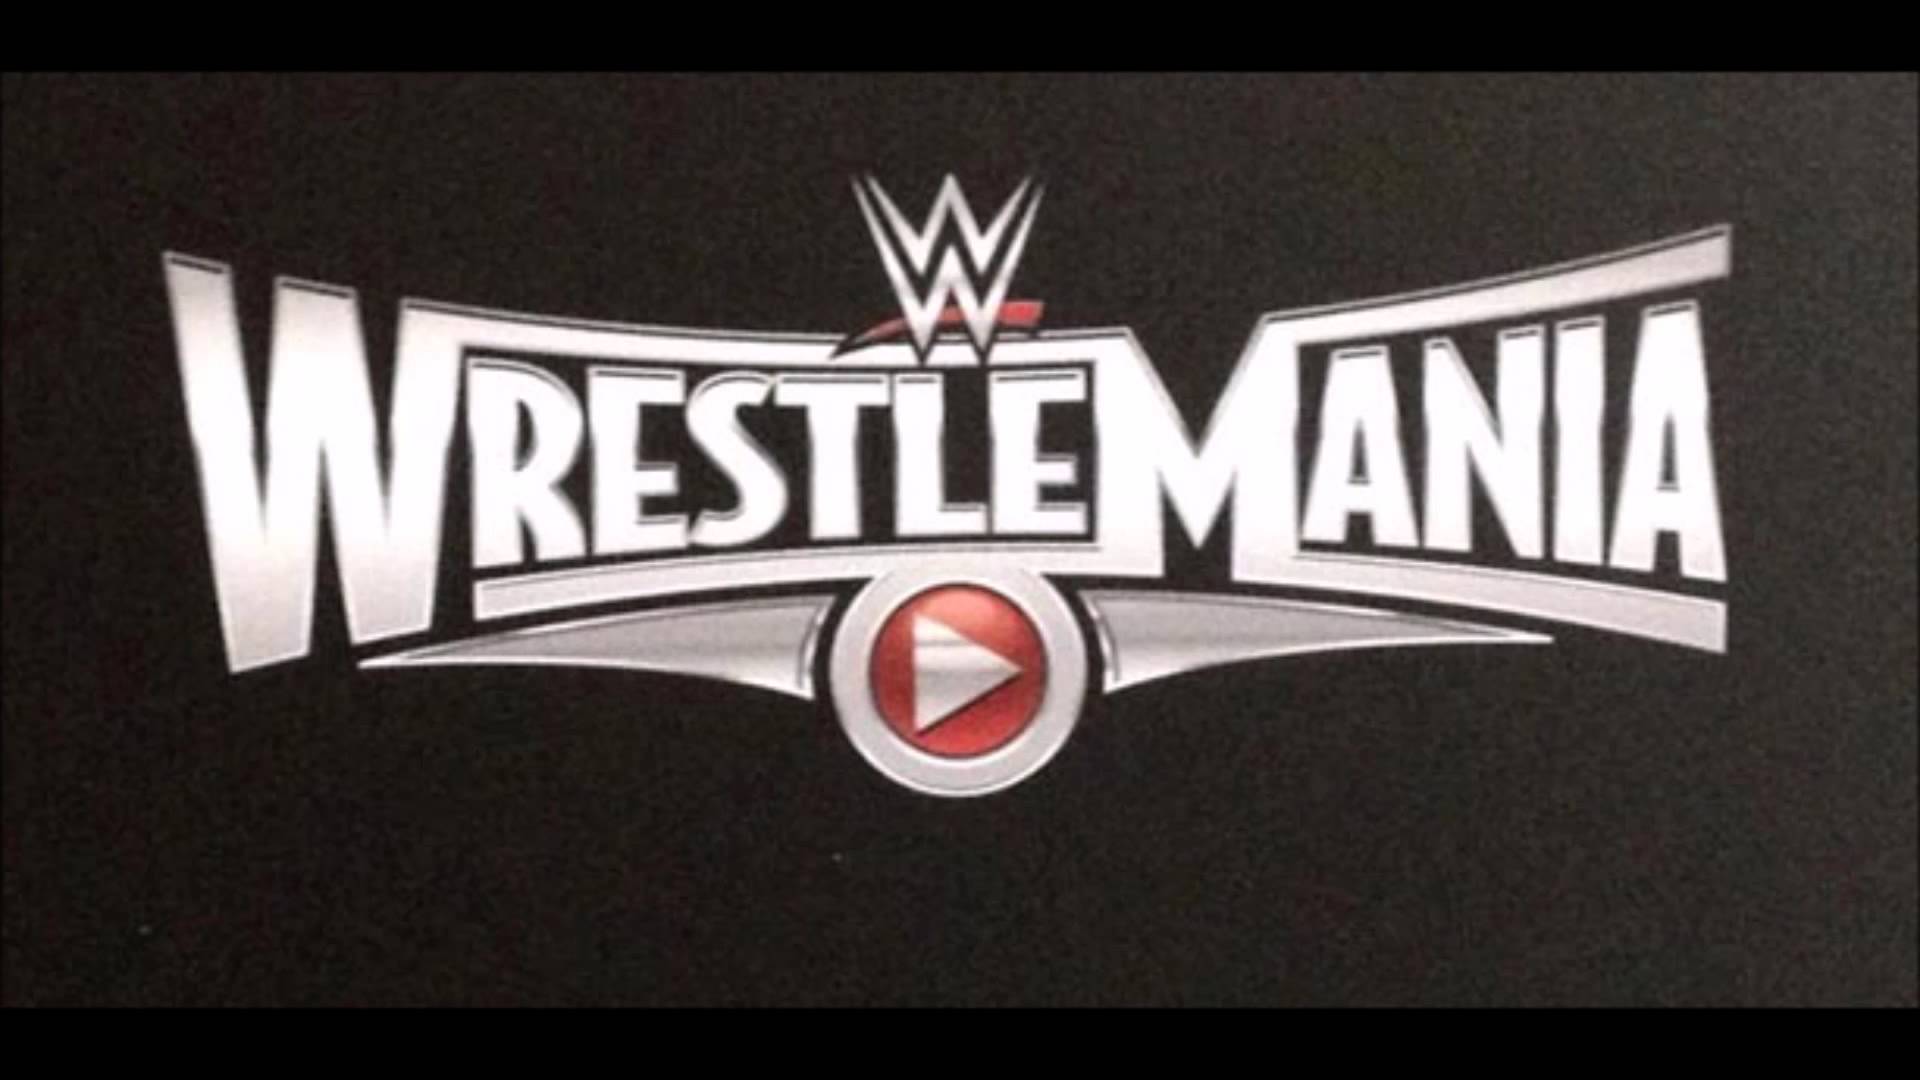 Wwe Official Wrestlemania Logo Revealed